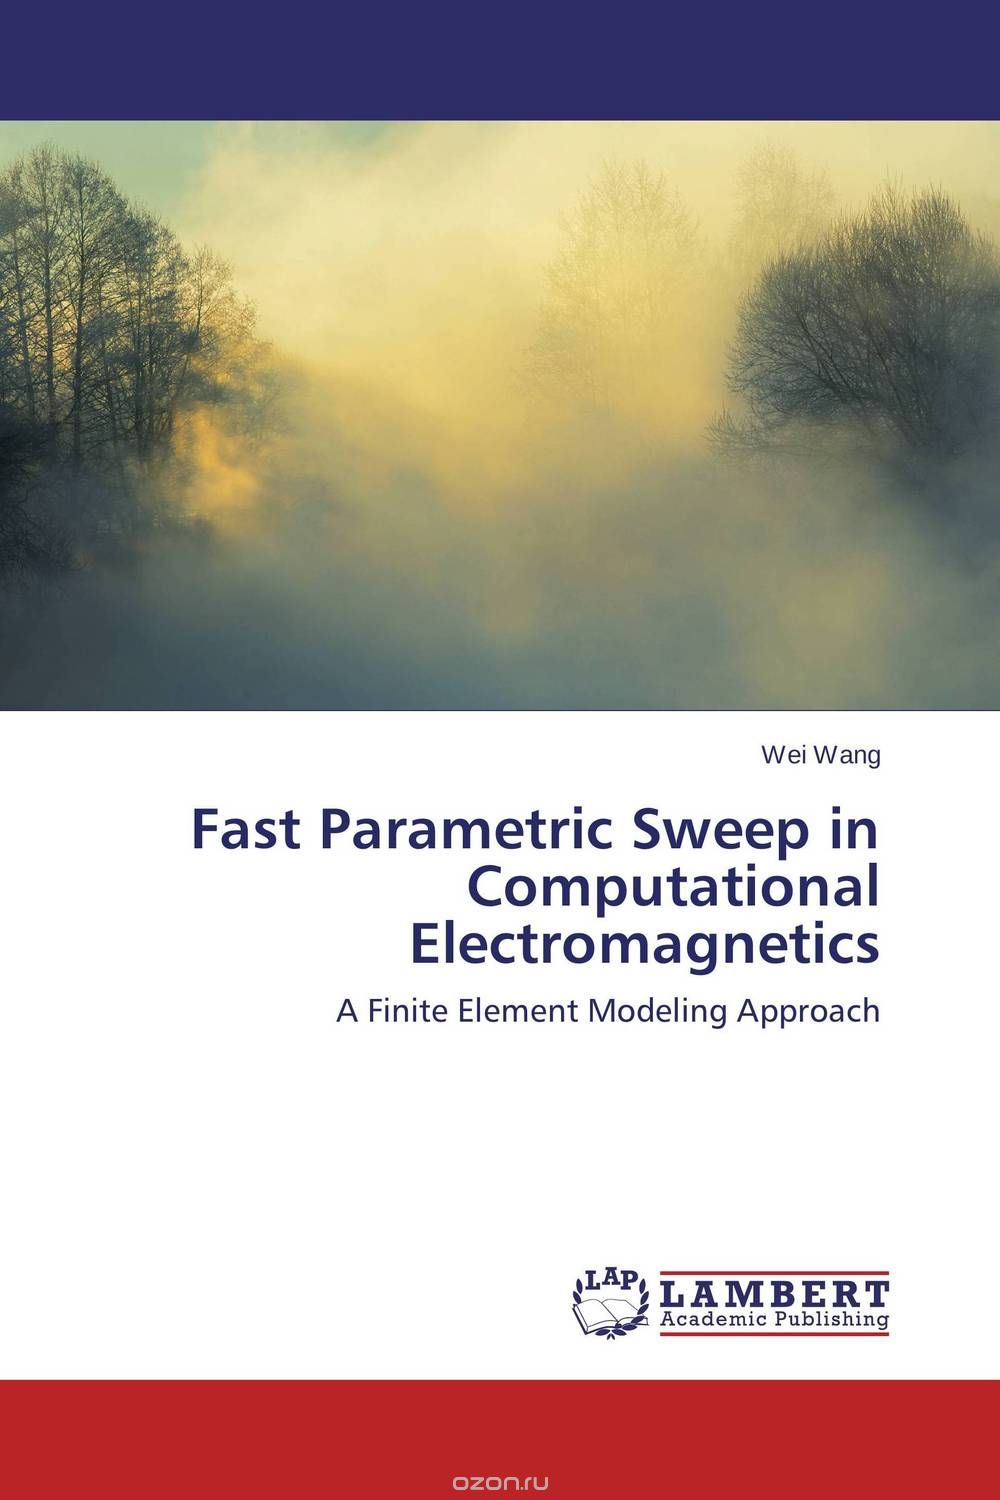 Скачать книгу "Fast Parametric Sweep in Computational Electromagnetics"